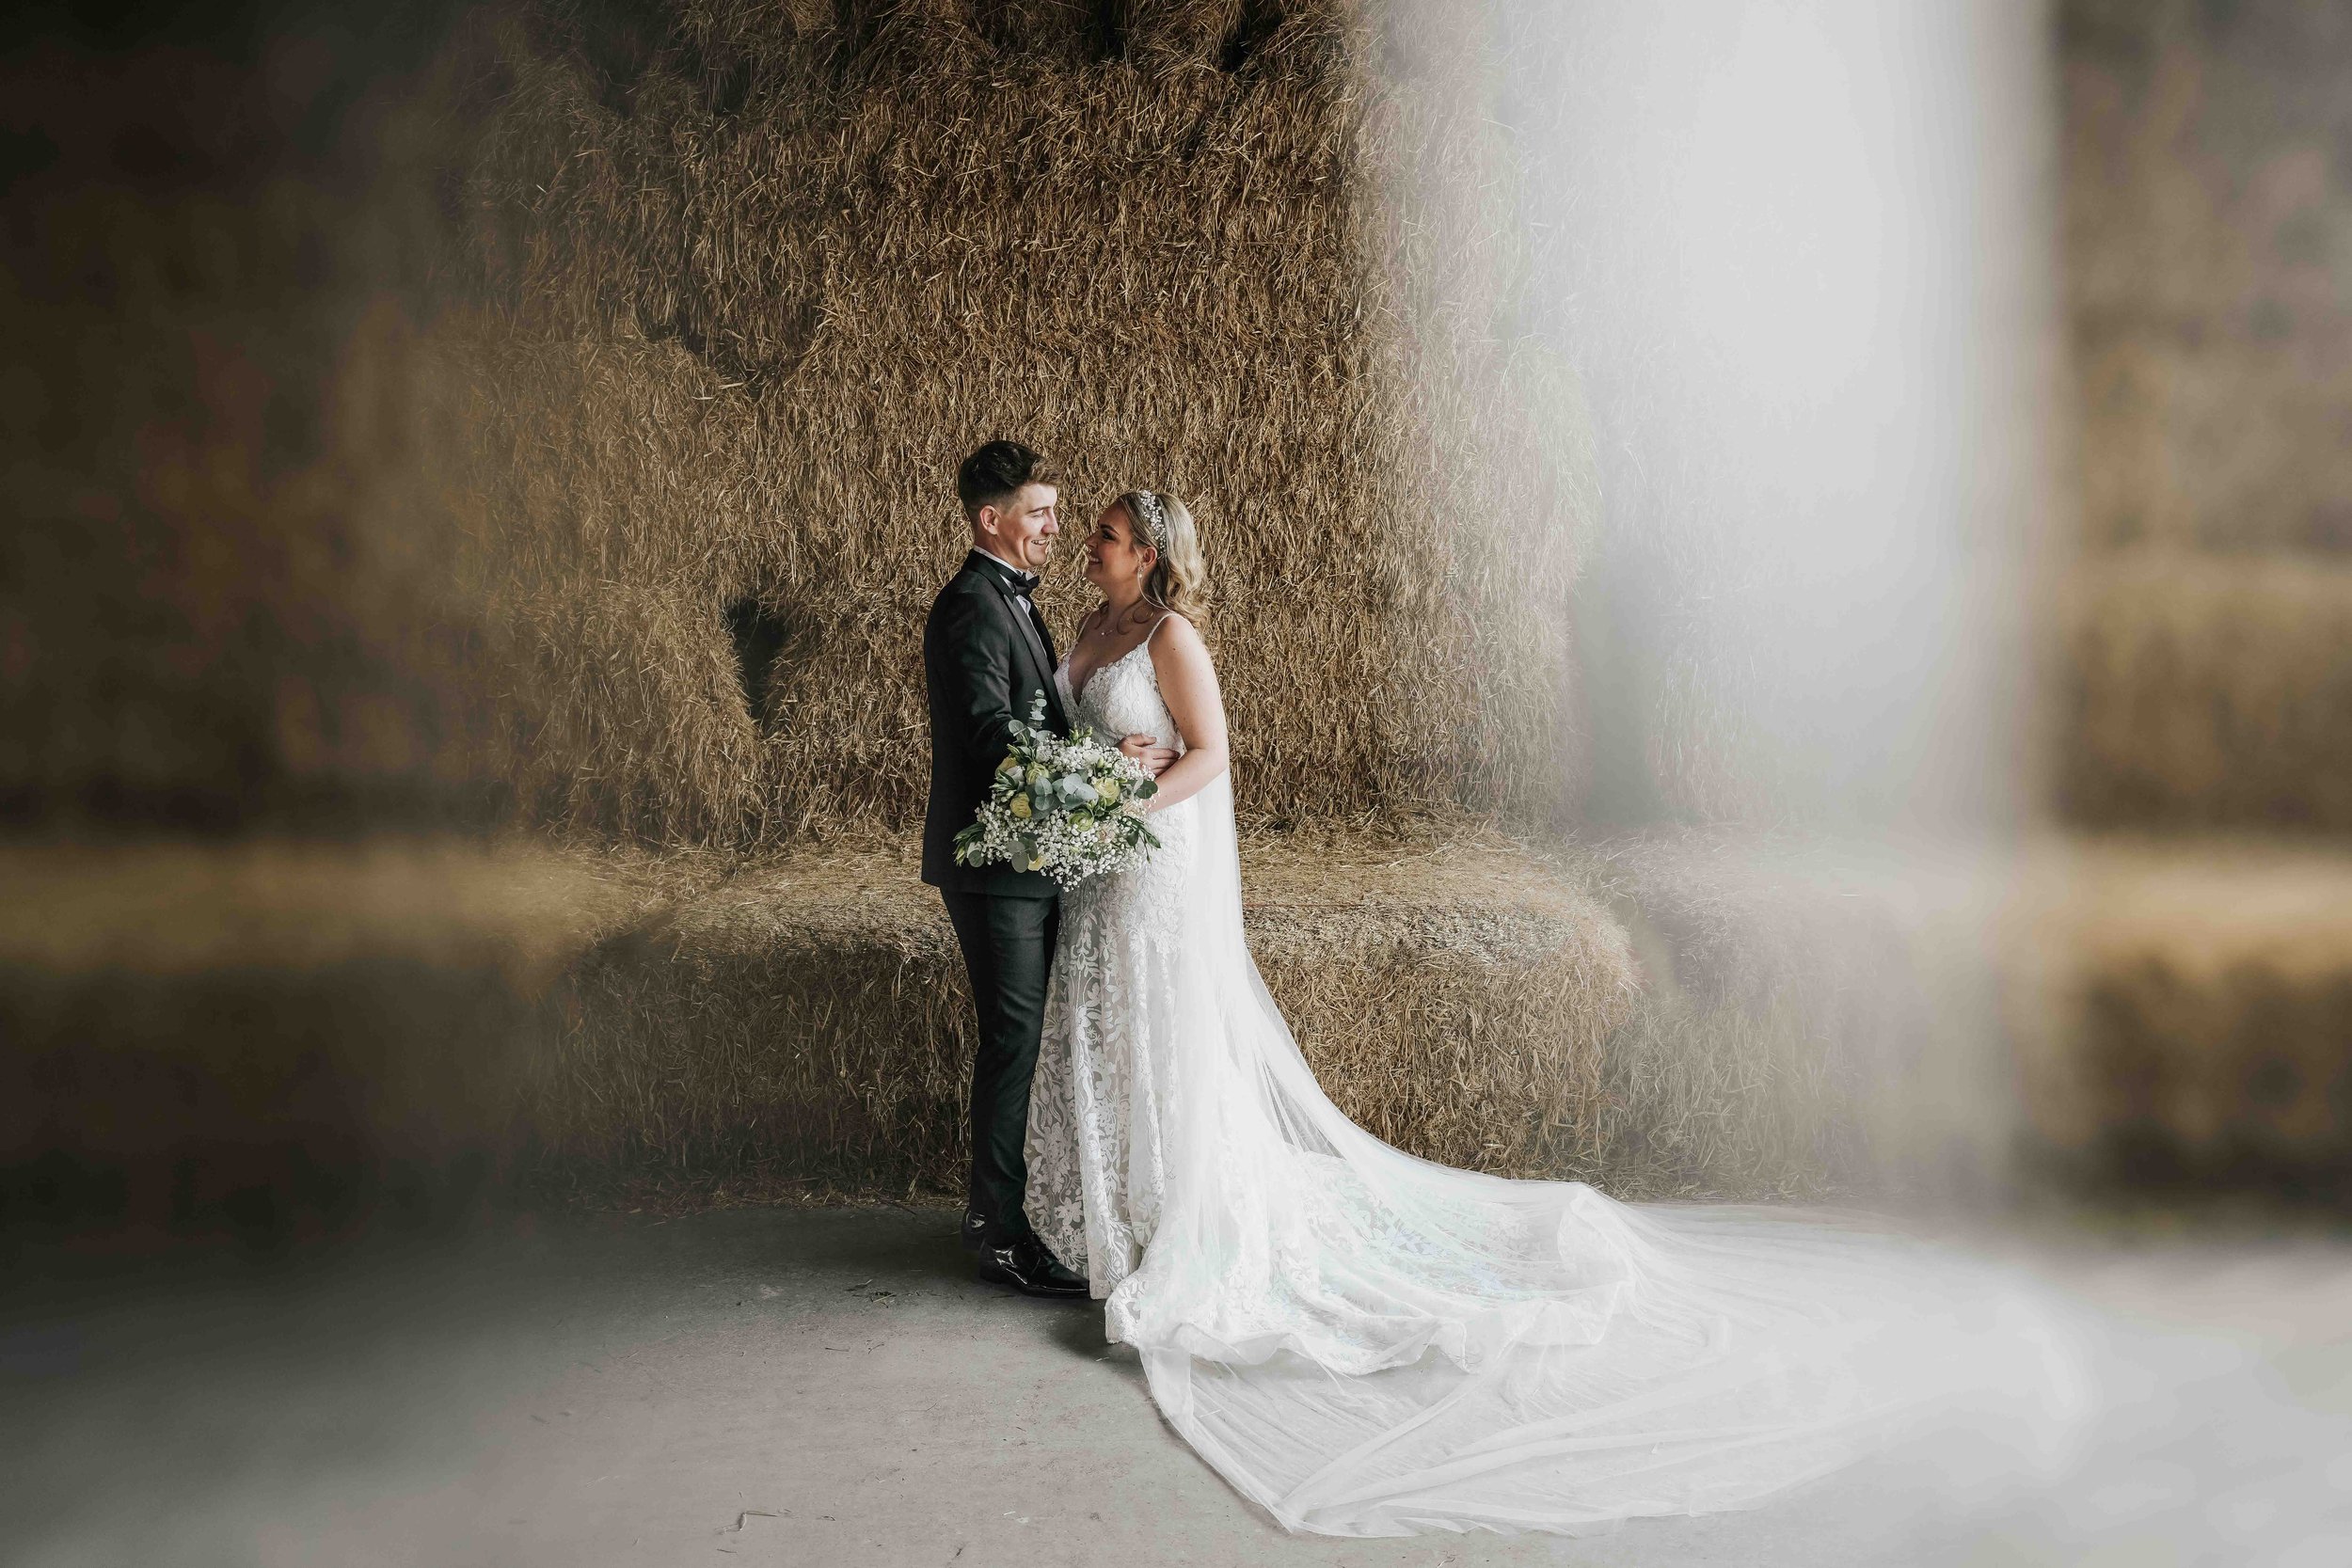 Owen House Wedding Barn Photography Cheshire Wedding Photography - 038.jpg